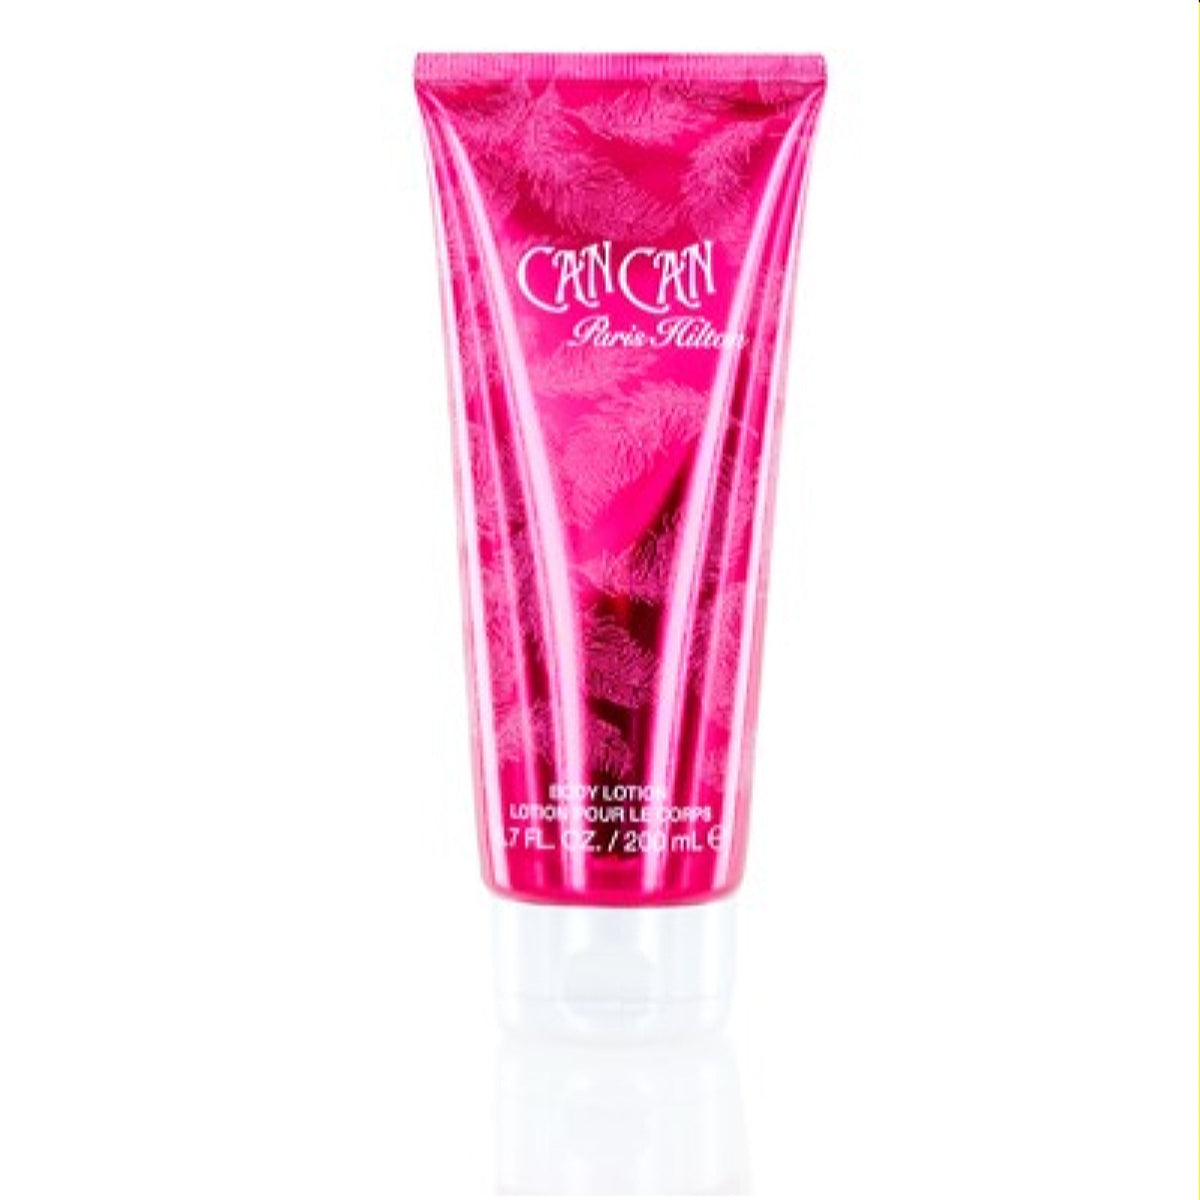 Can Can Paris Hilton Body Lotion 6.7 Oz (200 Ml) For Women  5994